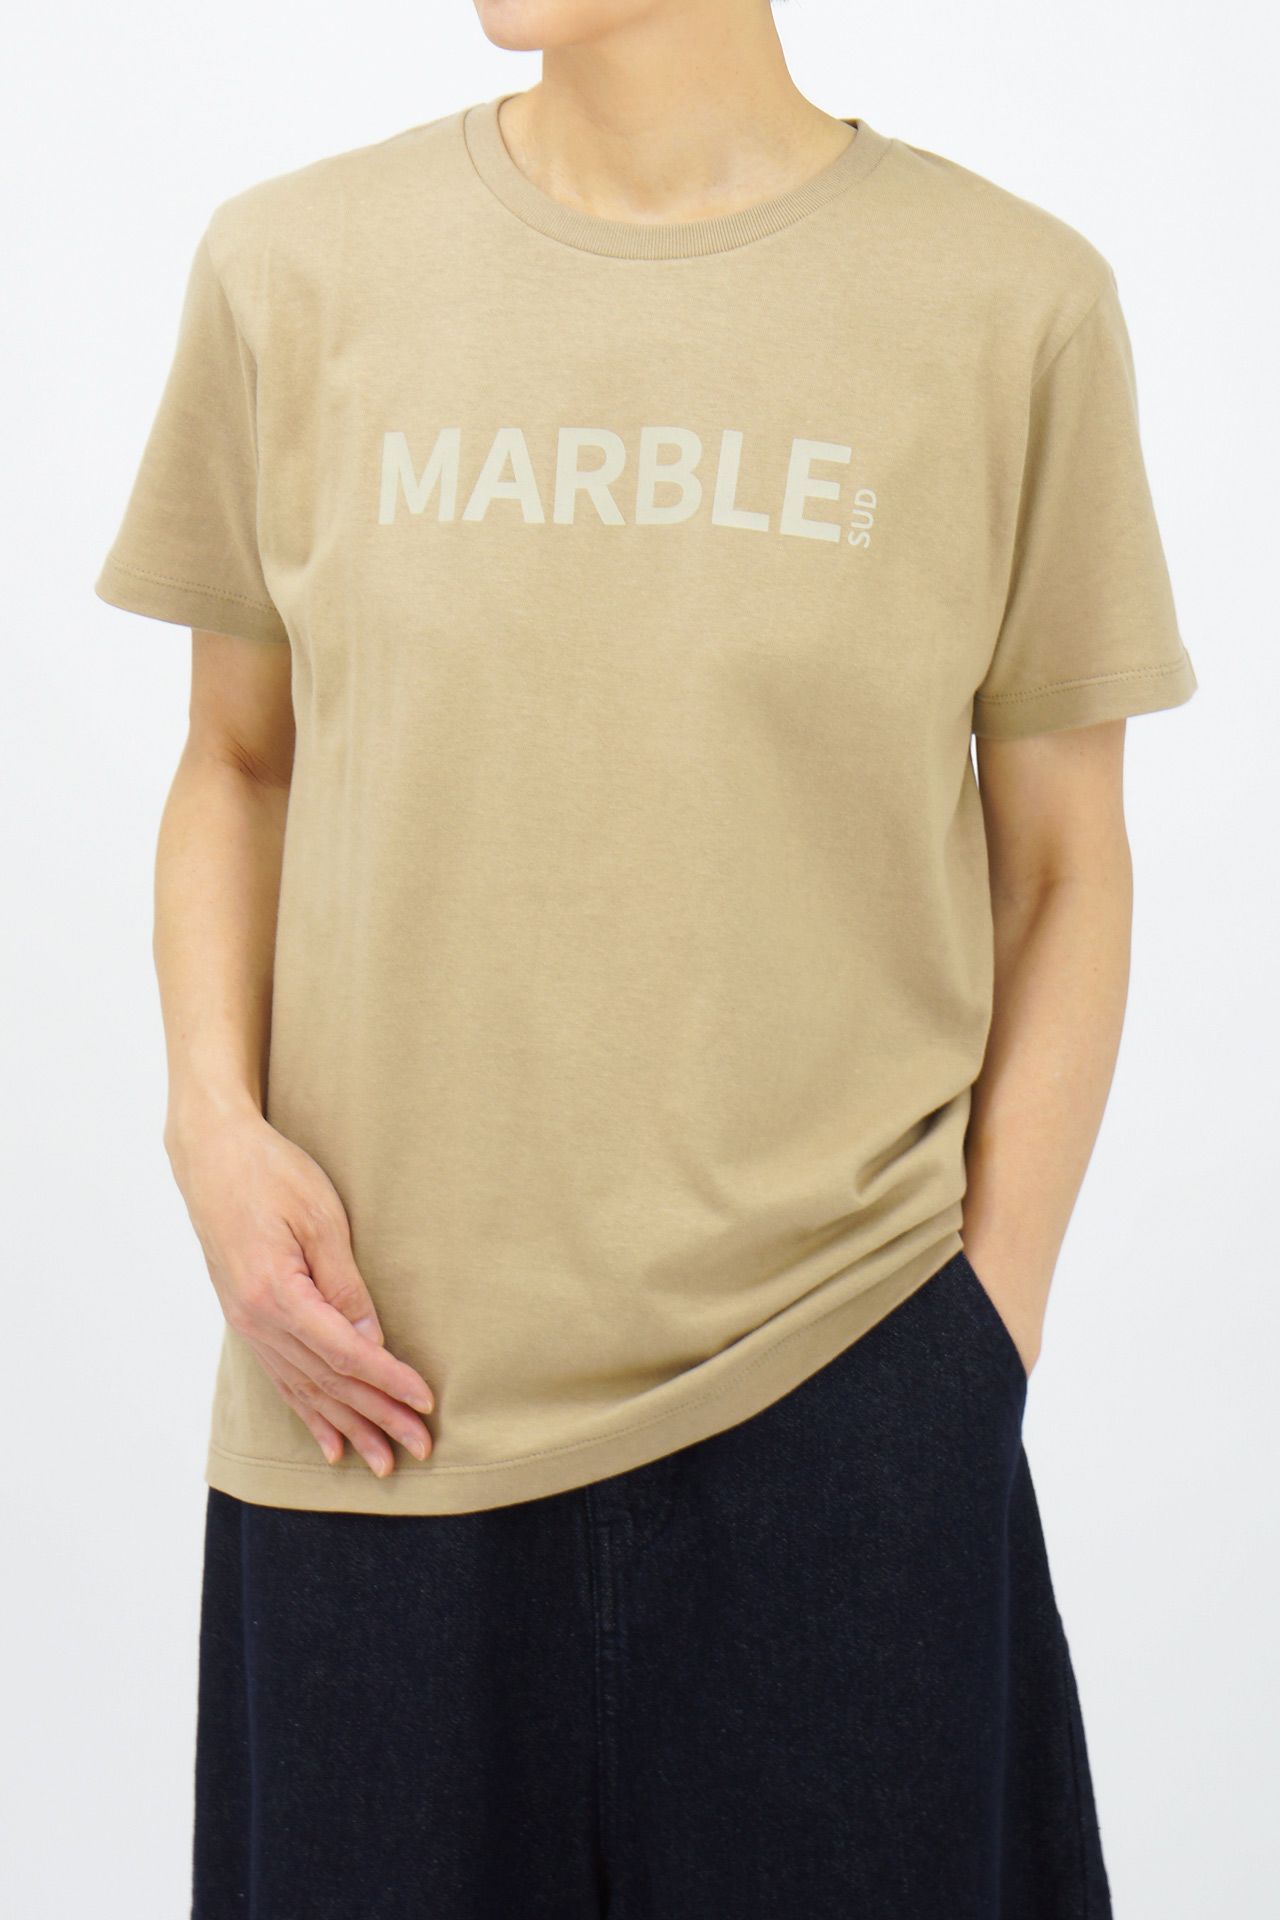 Marble フロッキー S/S TEE | marble SUD(マーブルシュッド)公式通販